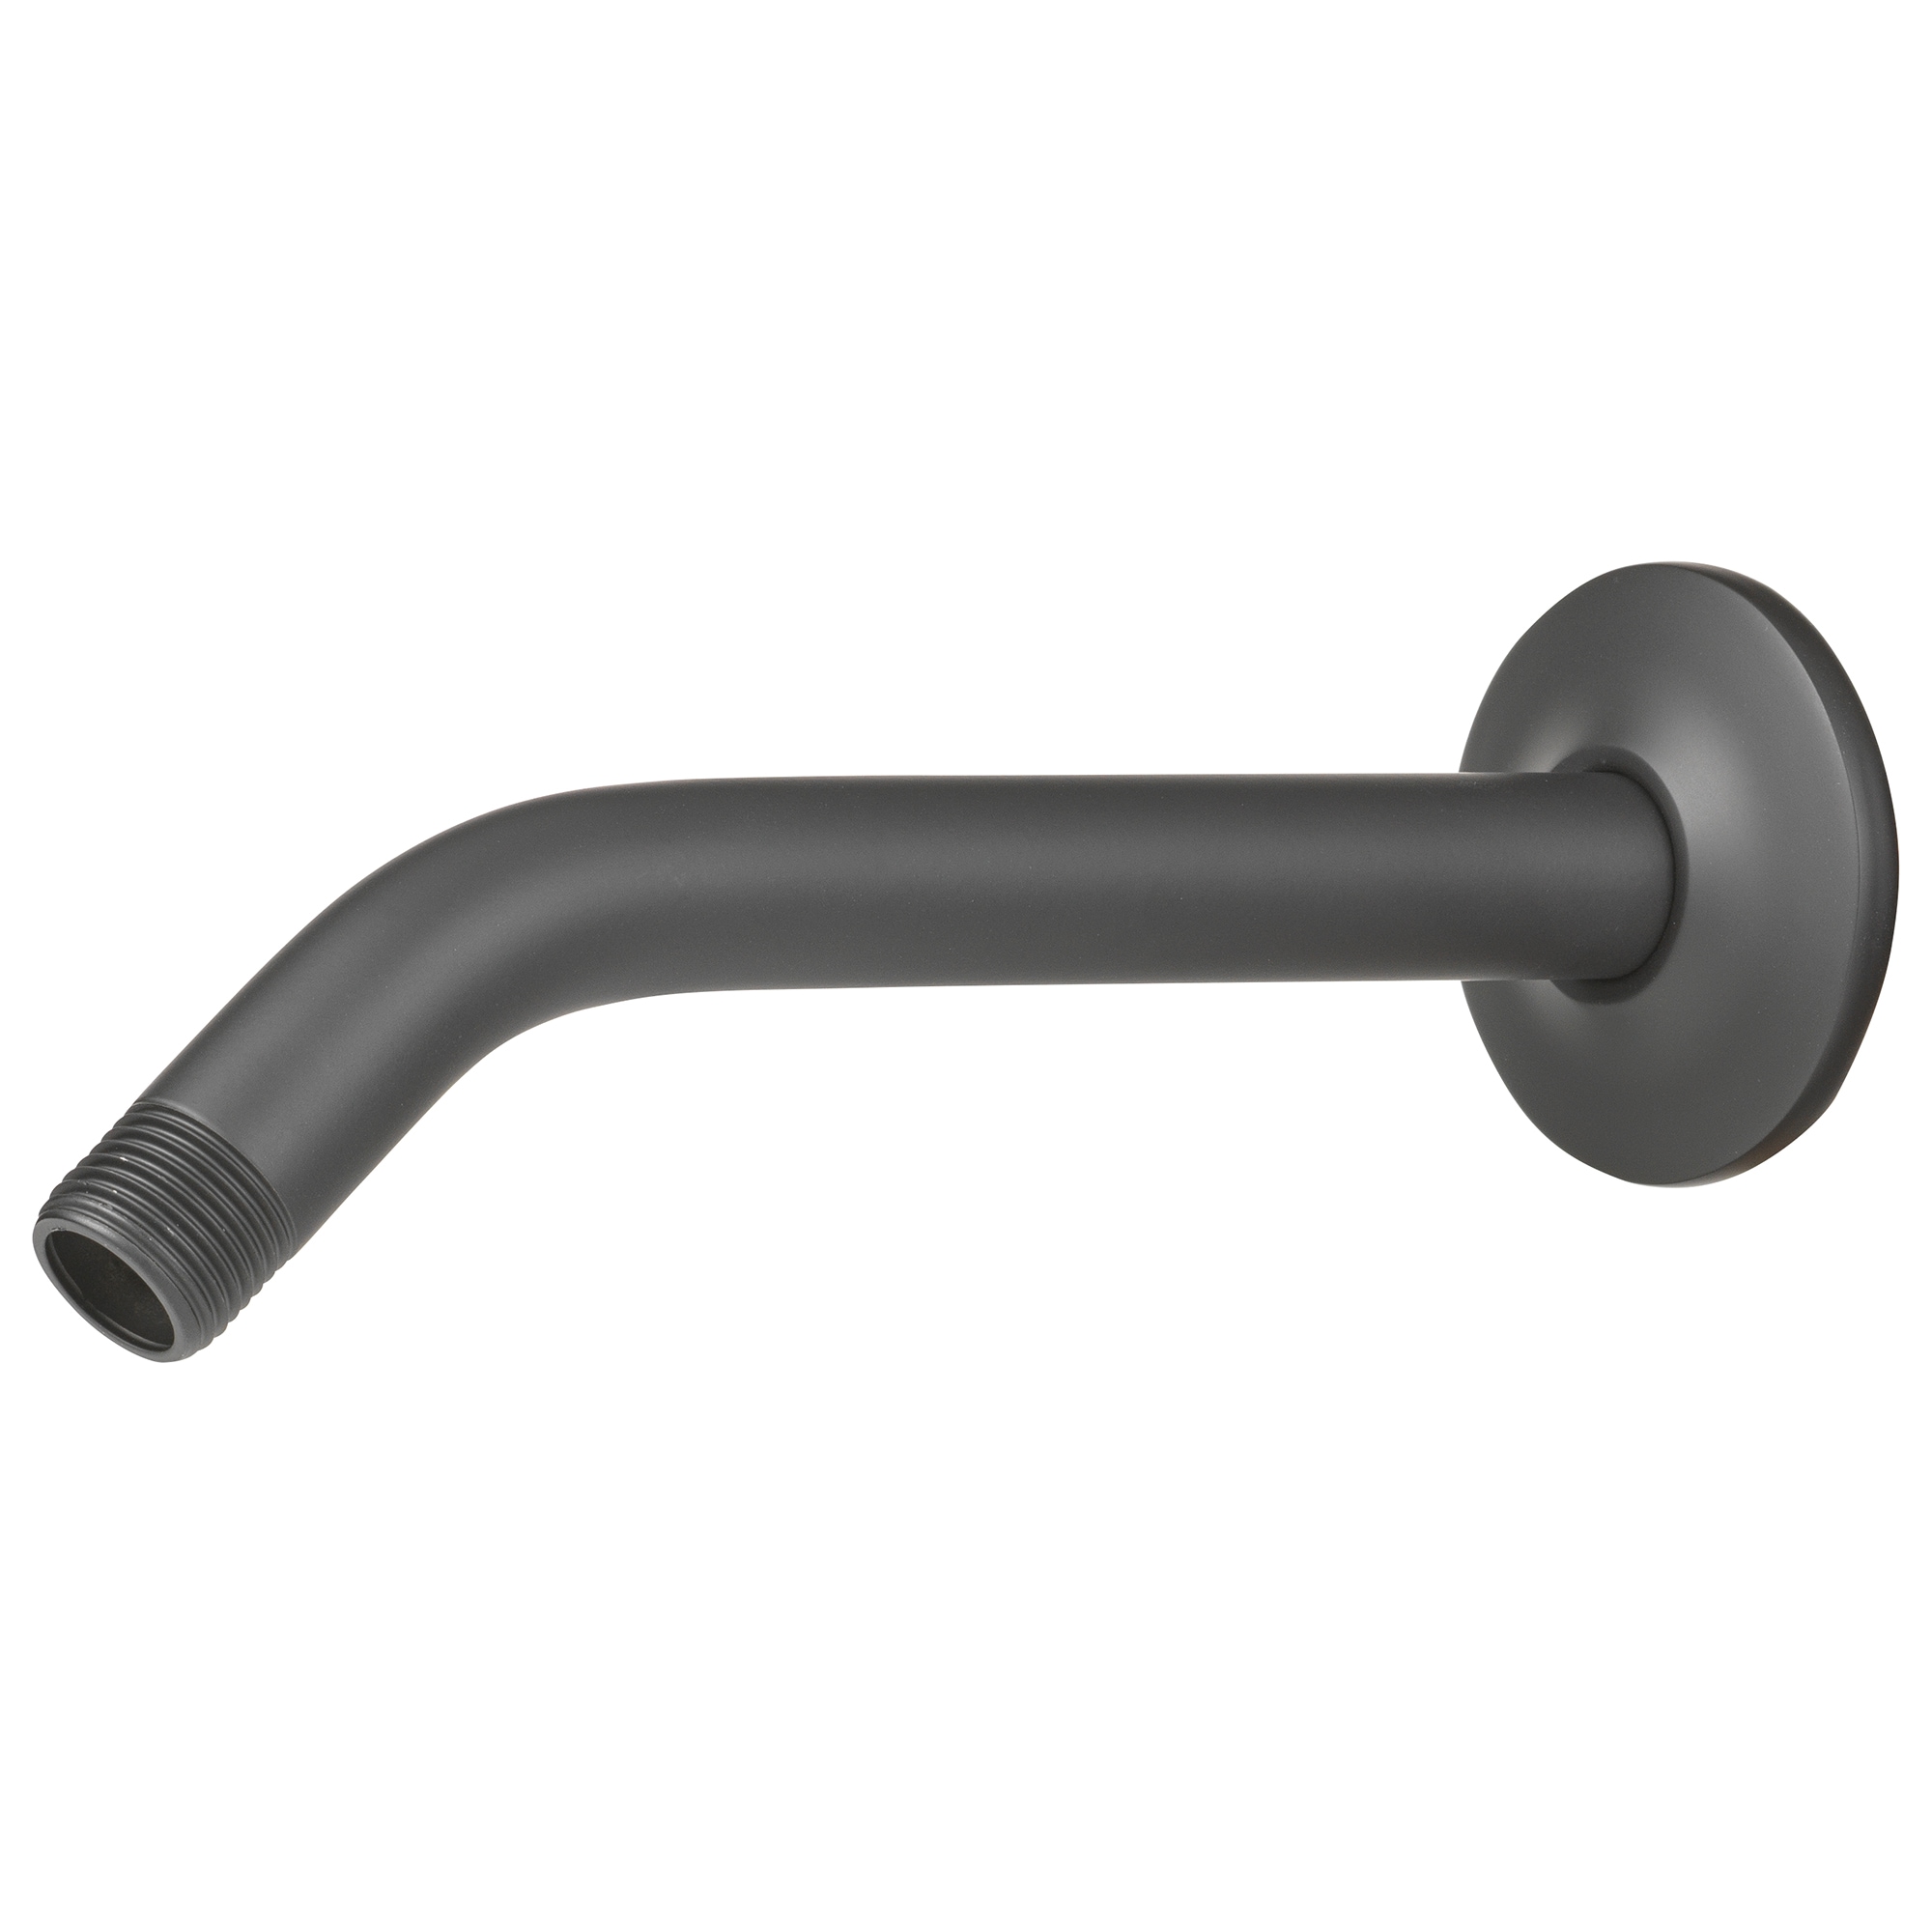 15 Universal Hook Bar | Graphic Arm 8